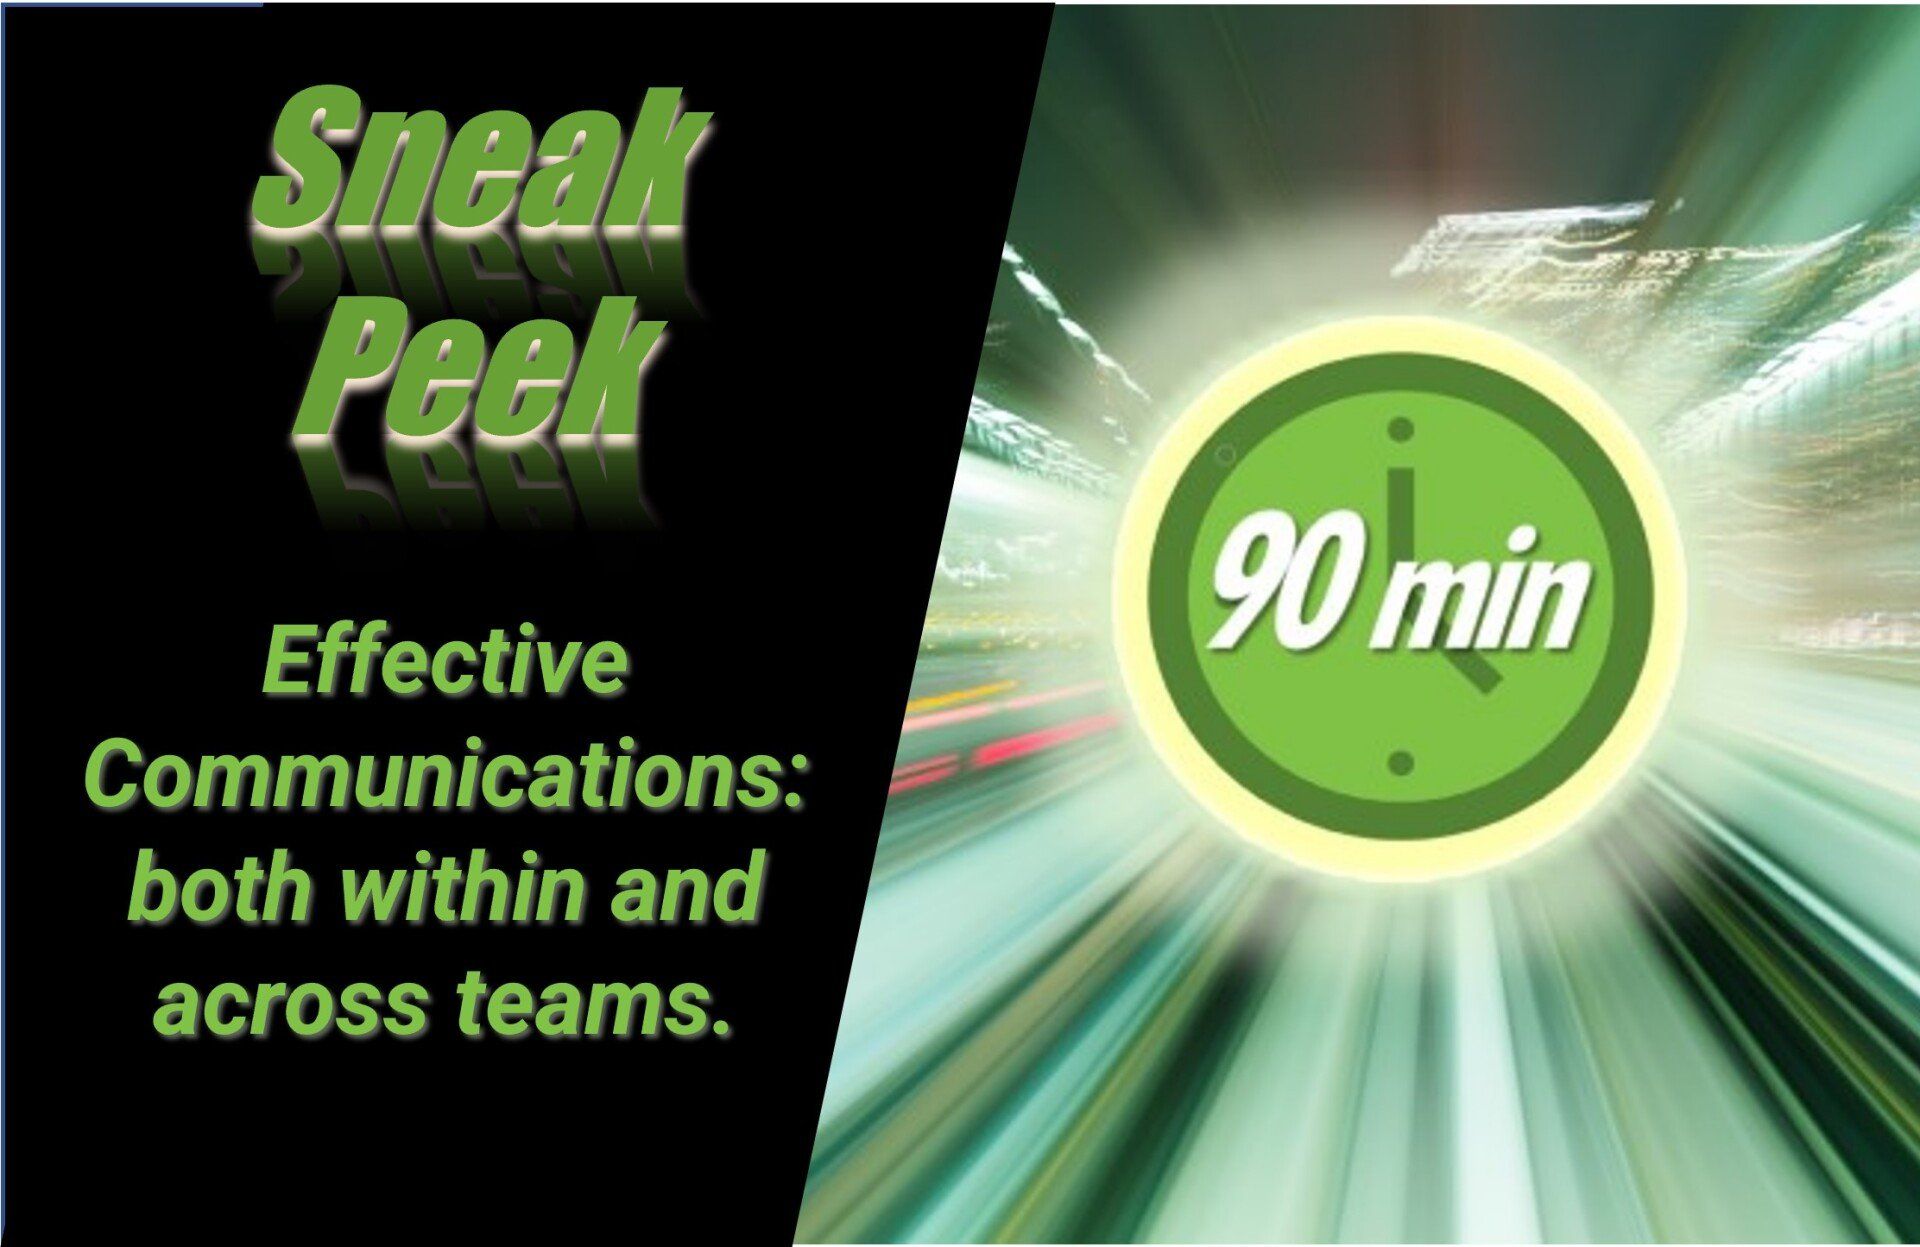 Sneak peek, Communication effectiveness, actionable communication strategy